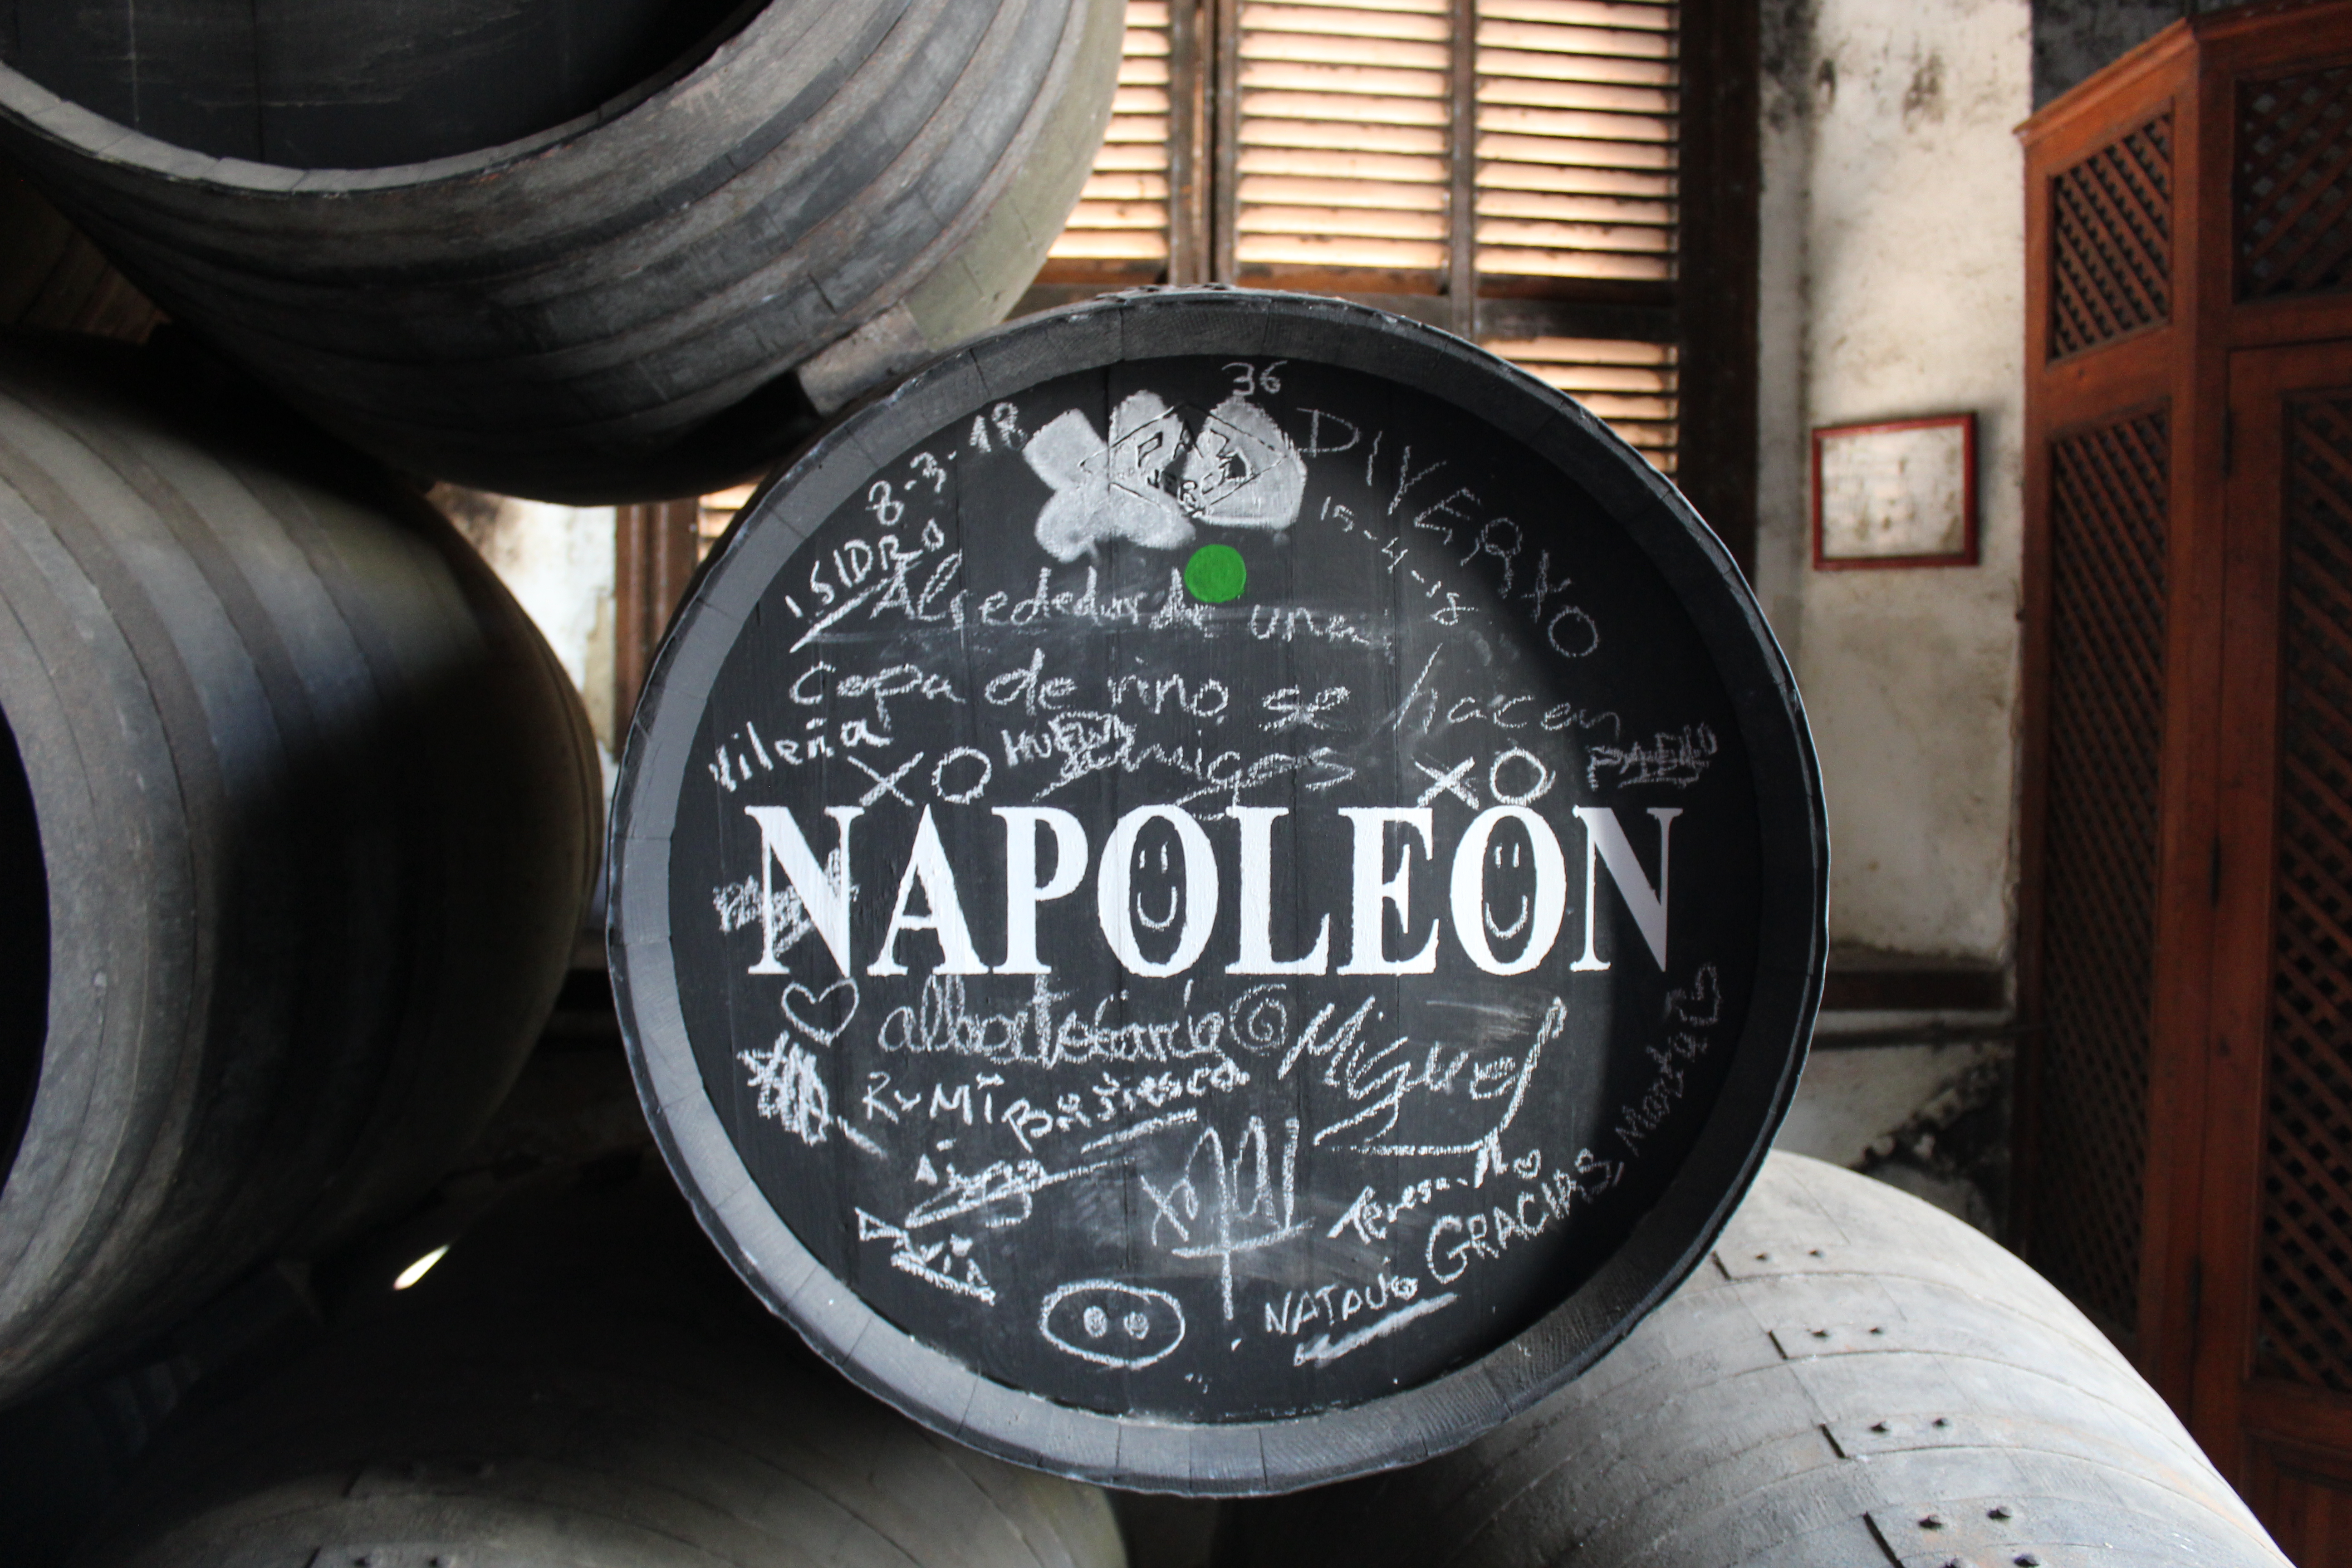 The Napoleon amontillado sherry at Bodegas Hidalgo La Gitana.